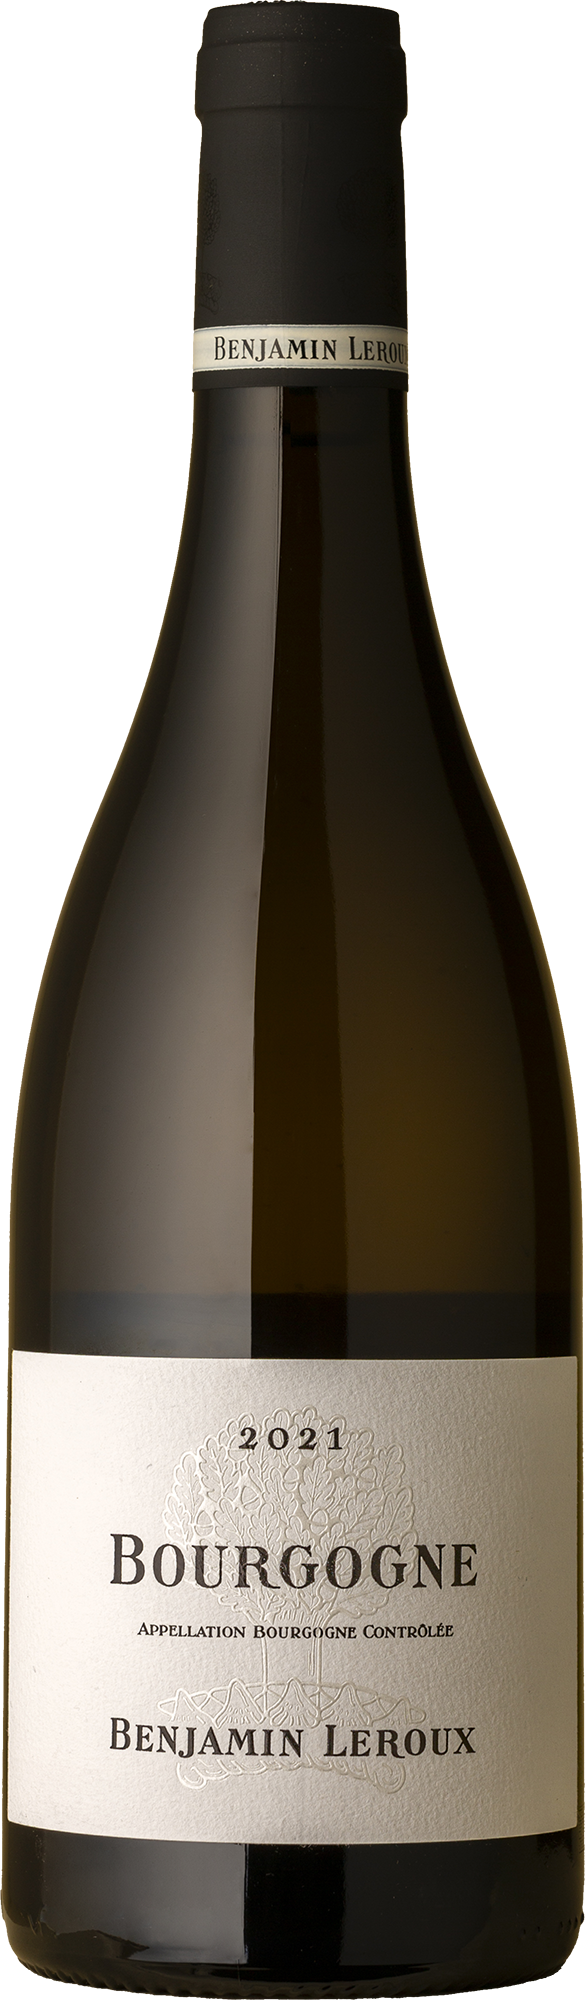 Benjamin Leroux - Bourgogne Blanc Chardonnay 2021 White Wine